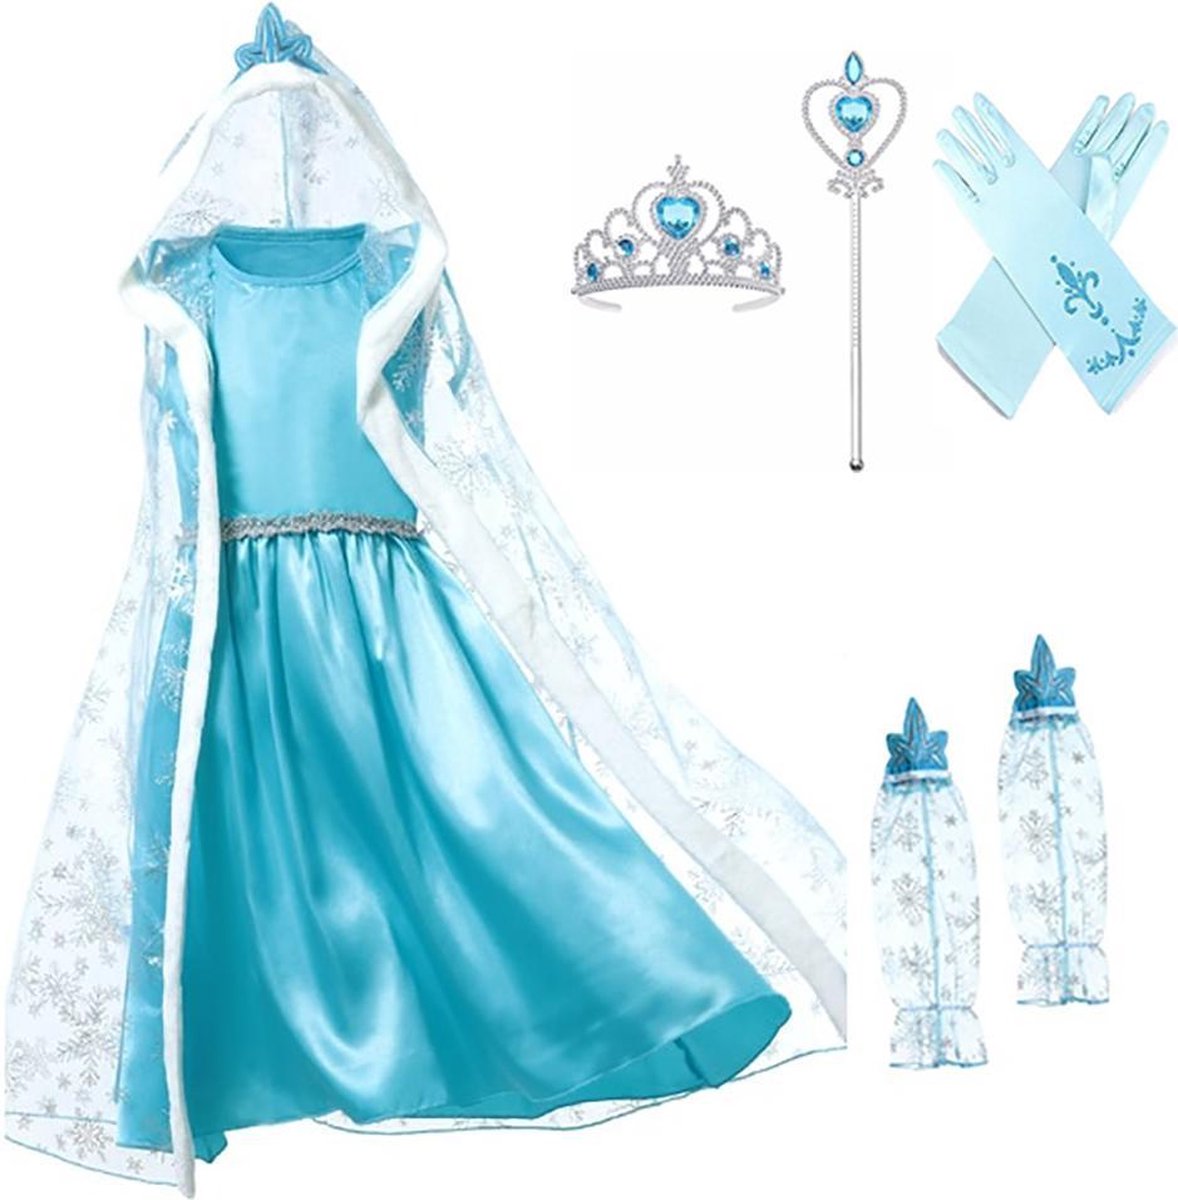 Het Betere Merk - Prinsessenjurk meisje - Blauwe jurk - maat 116/122 (120) - losse cape + mouwen - Tiara - Toverstaf prinses - Handschoenen - Carnavalskleding meisje - Verkleedkleren Kind - Cadeau meisje - Verjaardag - Prinsessen speelgoed